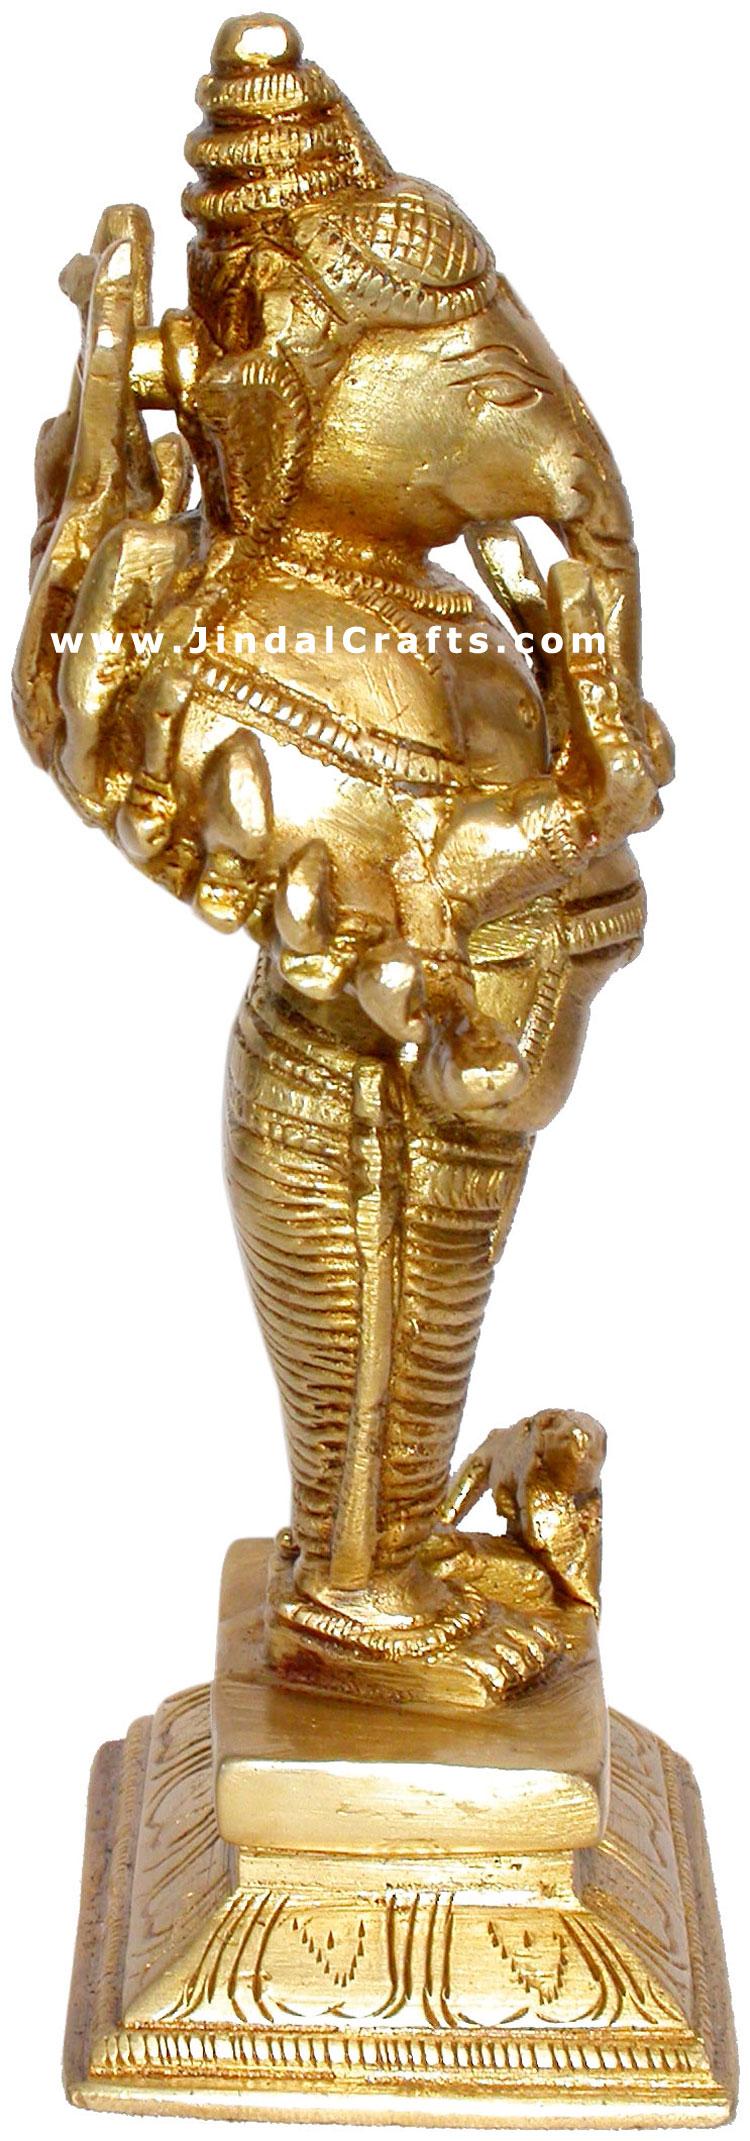 Sixteen Hans Lord Ganesha Hindu Religious Figurine Art